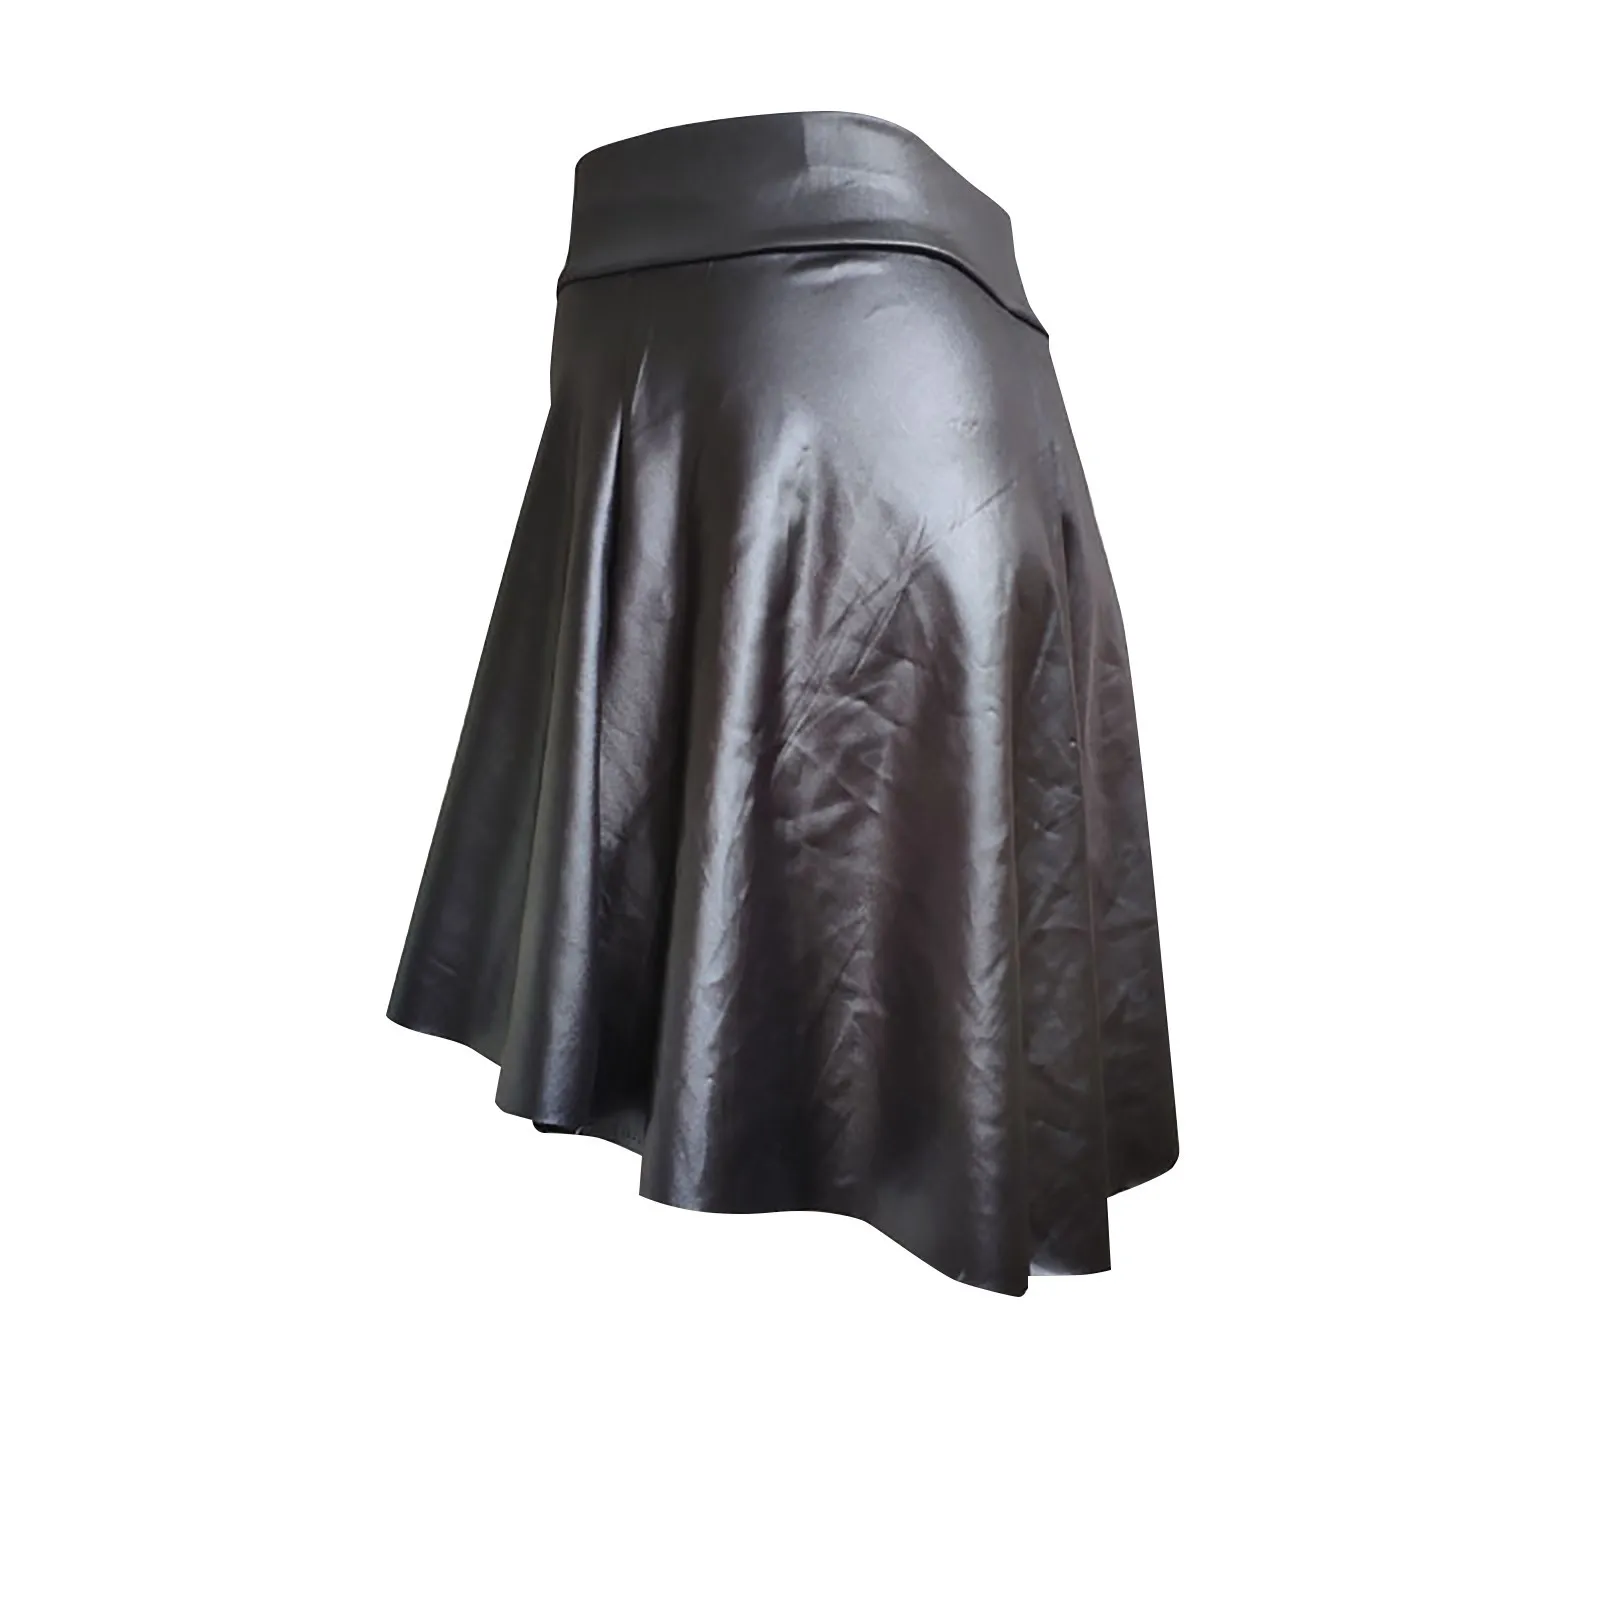 Women'S Fashion Solid Color Leather Sexy Elastic Waist Irregular Hem A-Line Short Skirt Kawaii Skirts For Women Mini Skirt Y2k